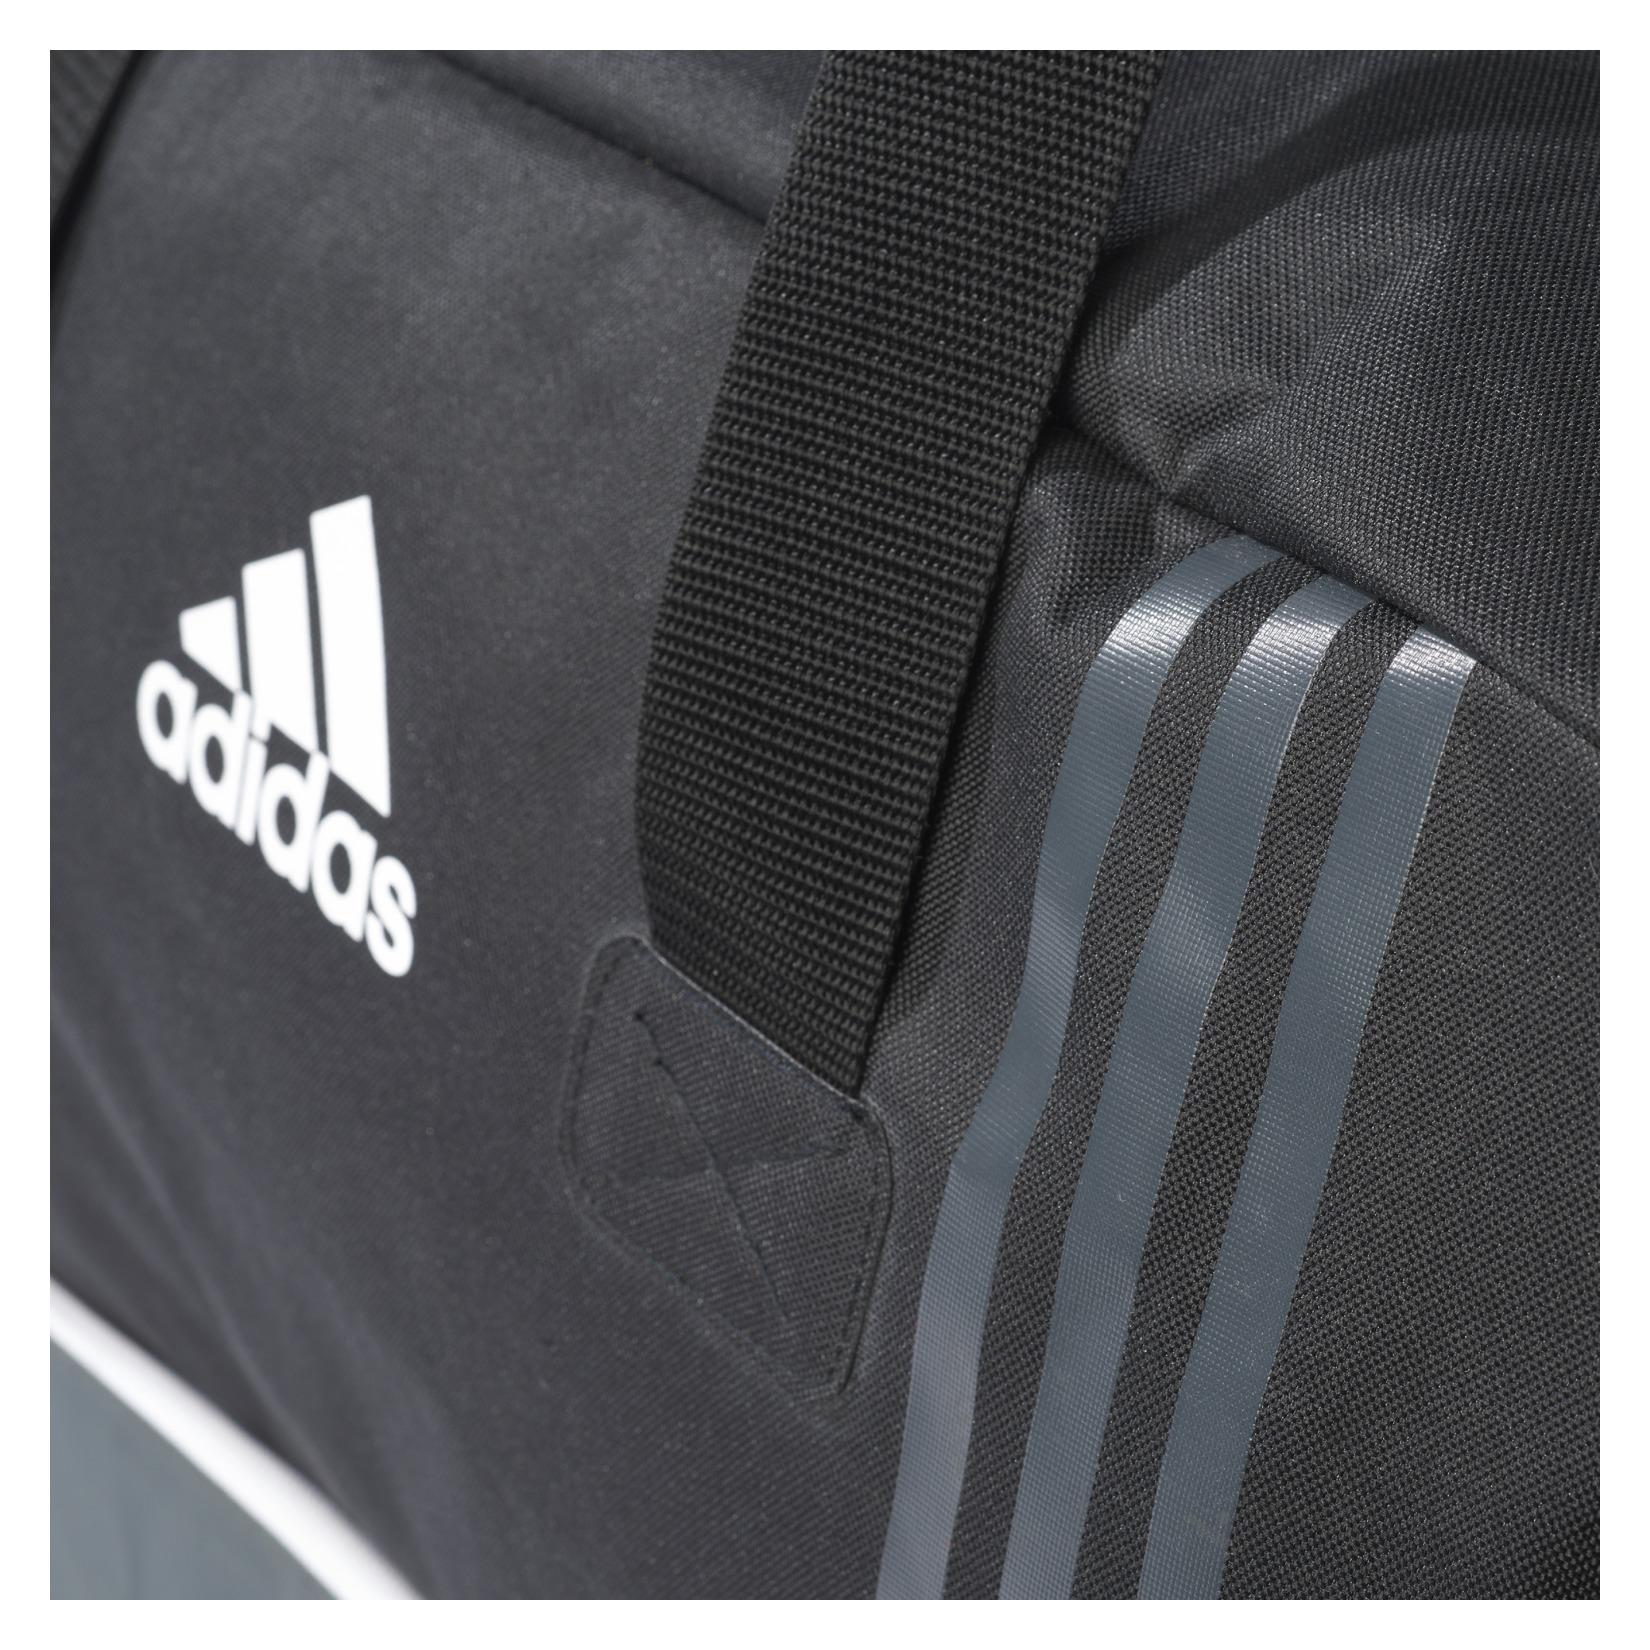 Adidas Tiro Team Bag With Bottom Compartment Medium